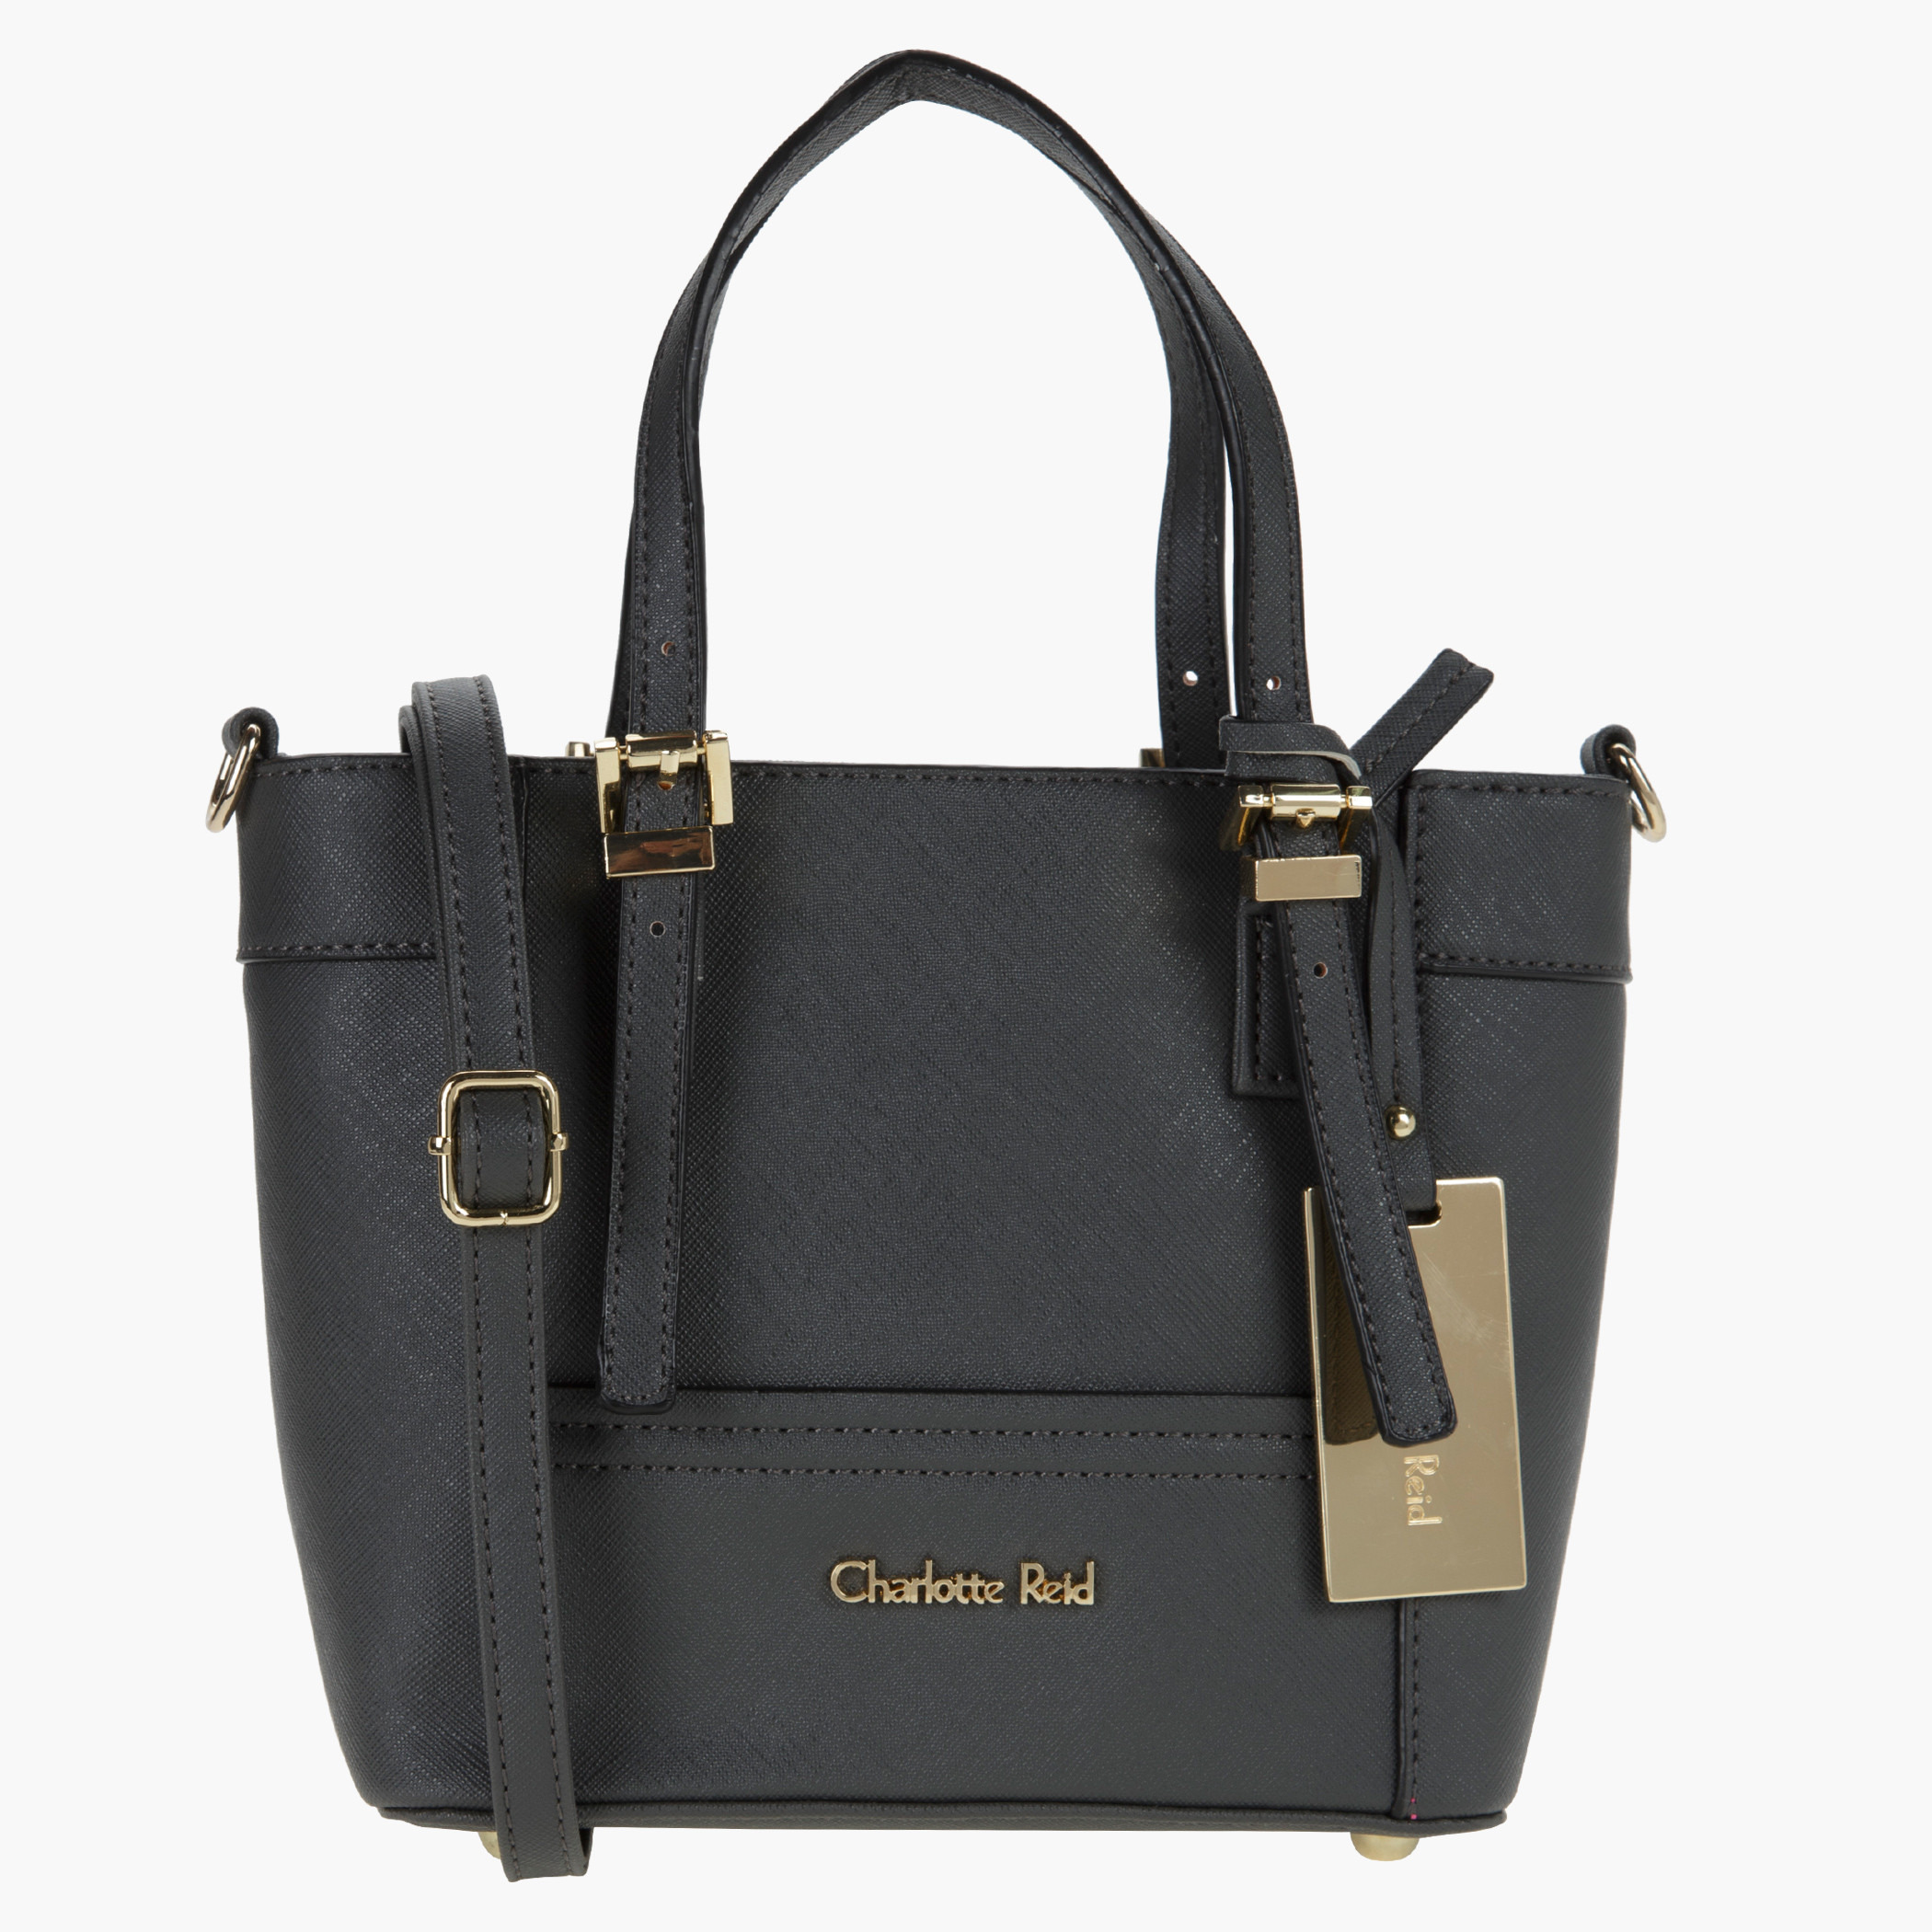 Buy Women's Charlotte Reid Tote Bag Online | Centrepoint UAE